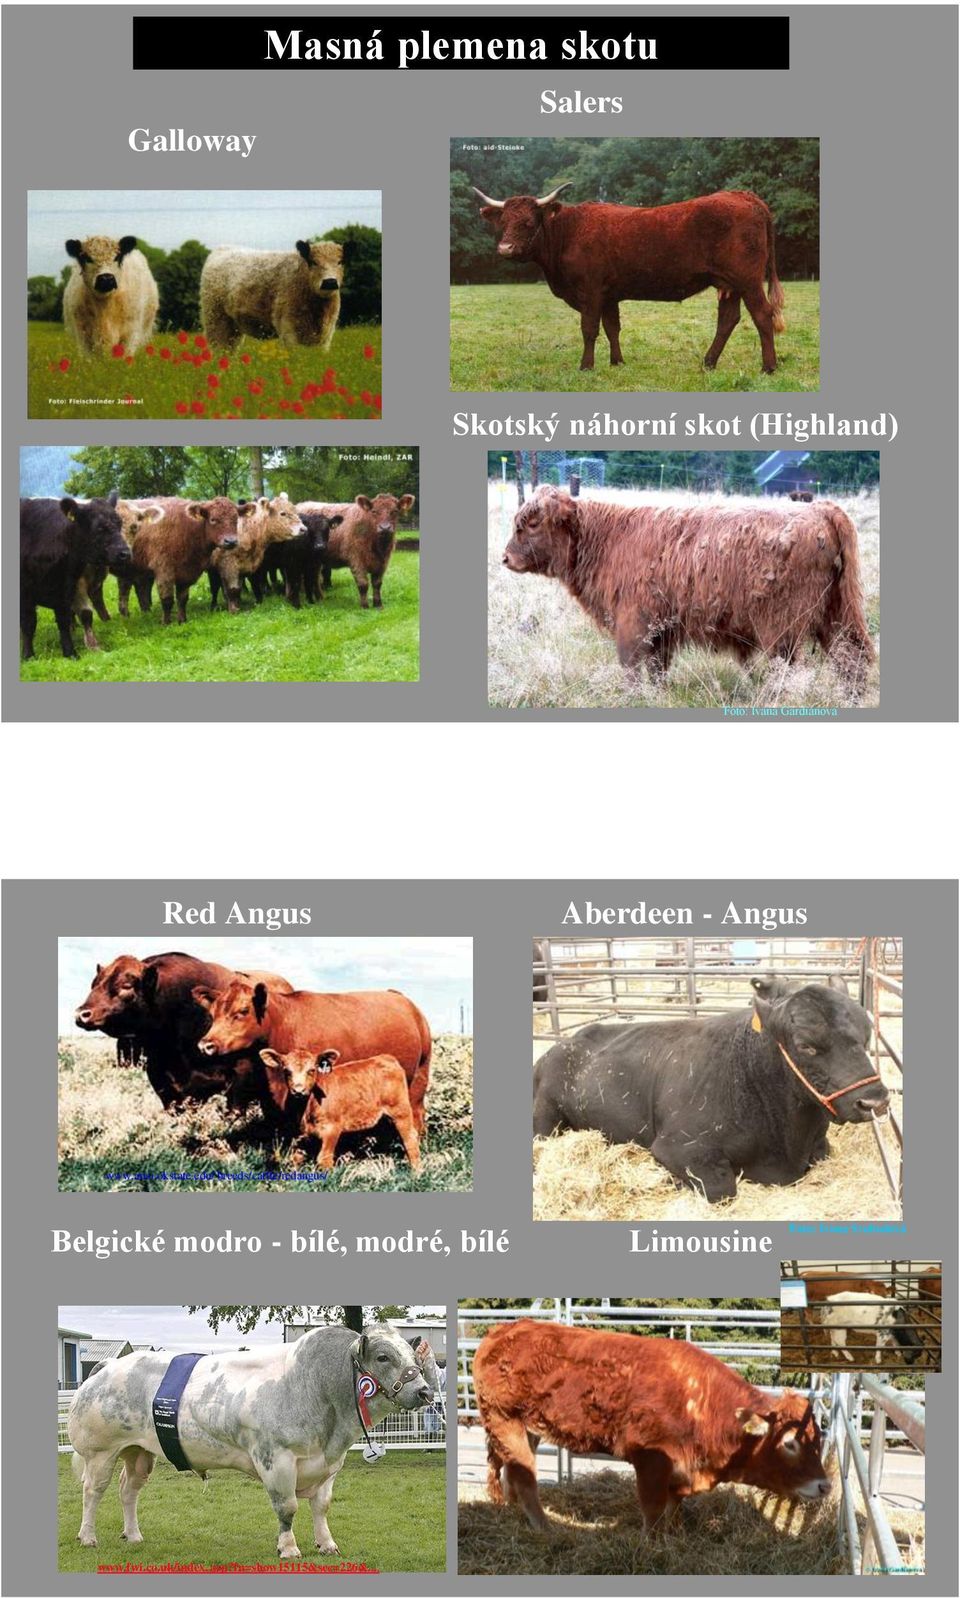 edu/ breeds/cattle/redangus/ Belgické modro - bílé, modré, bílé